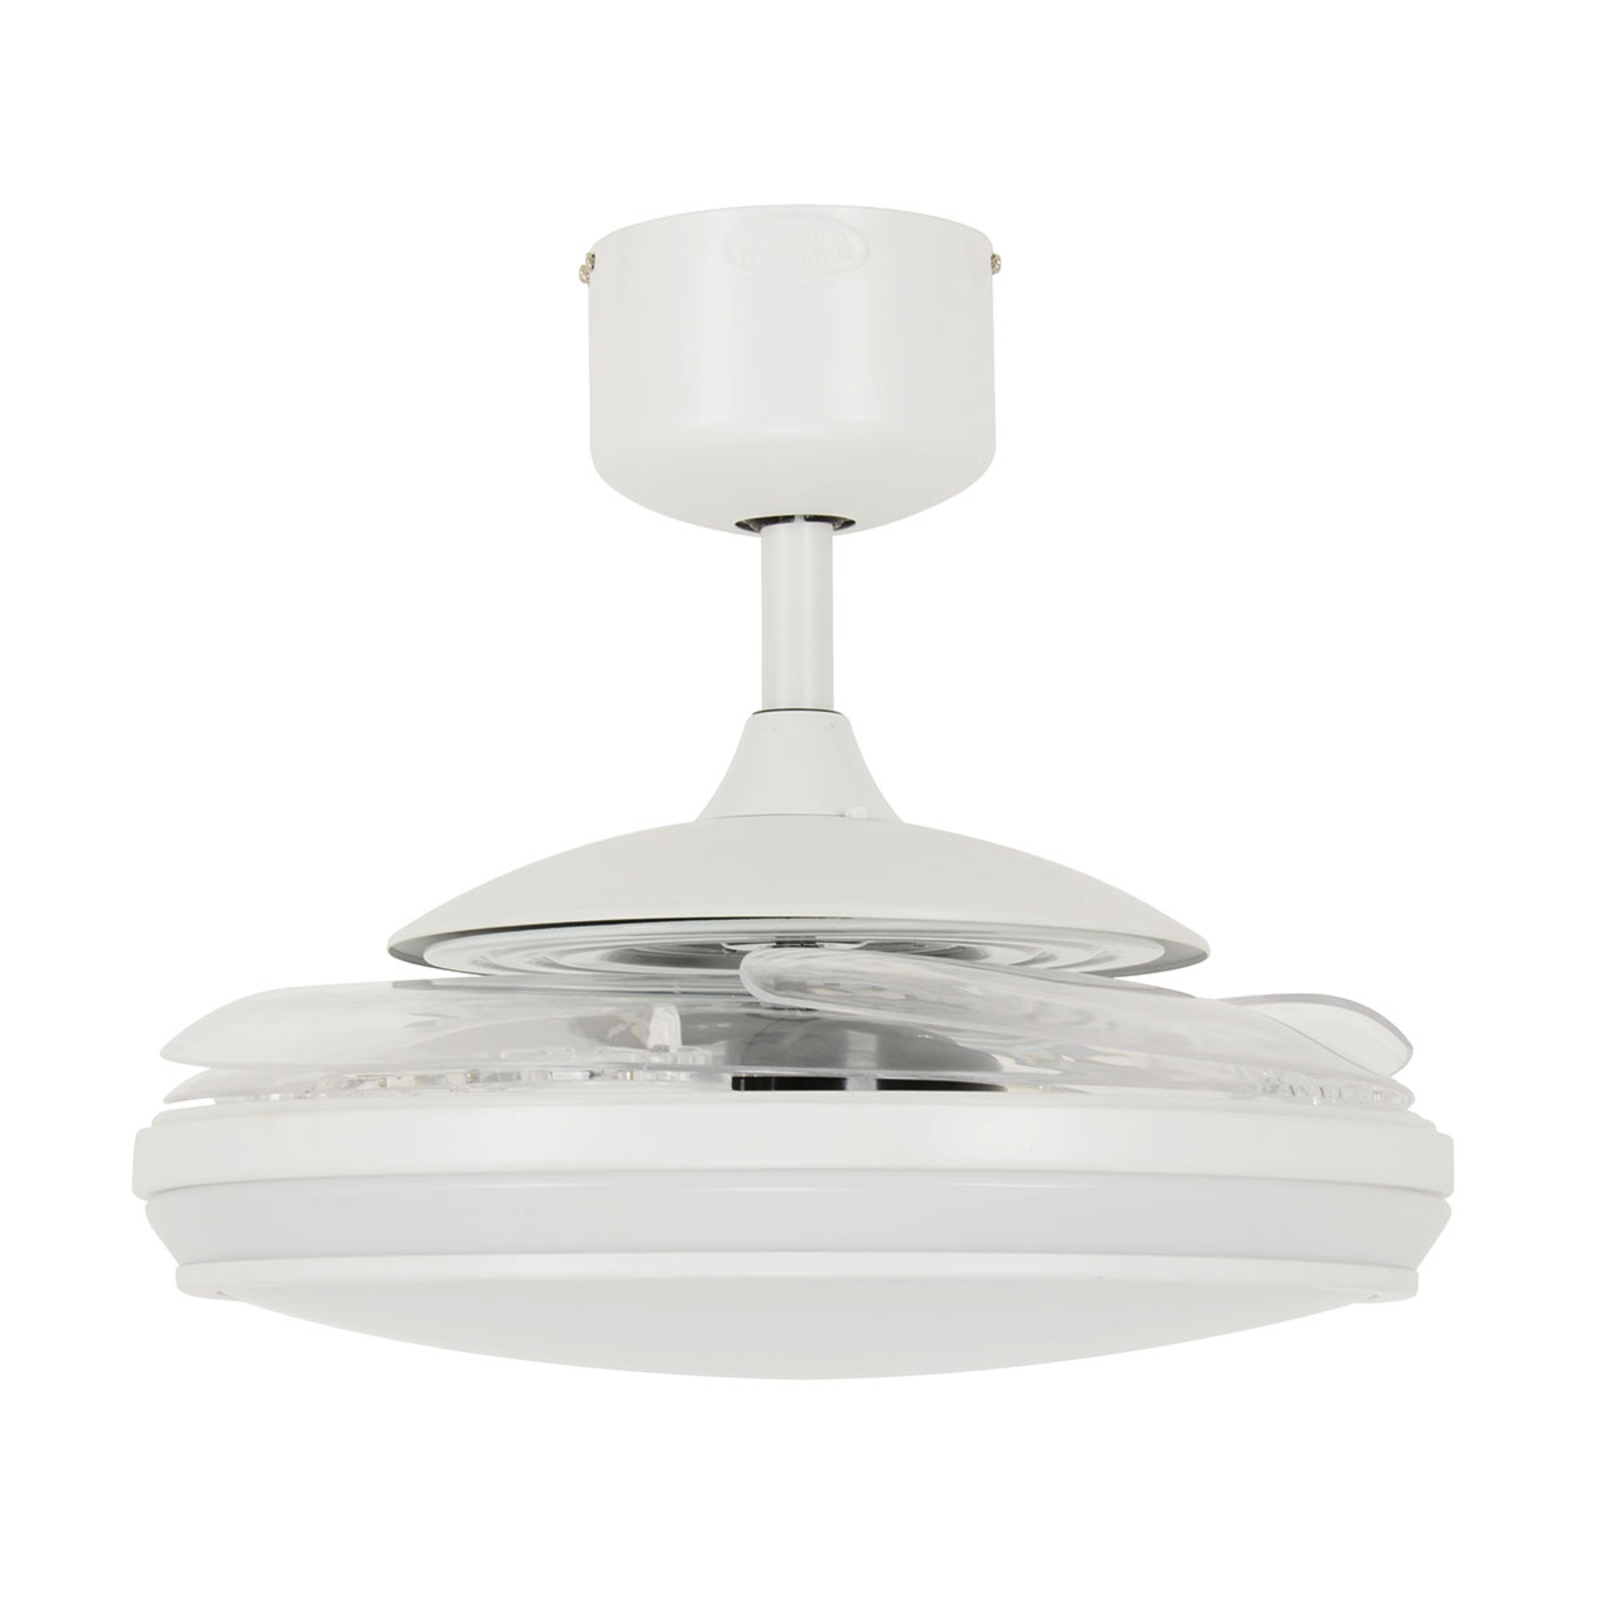 Beacon LED stropni ventilator Fanaway Evo 1 bijeli 121 cm tihi